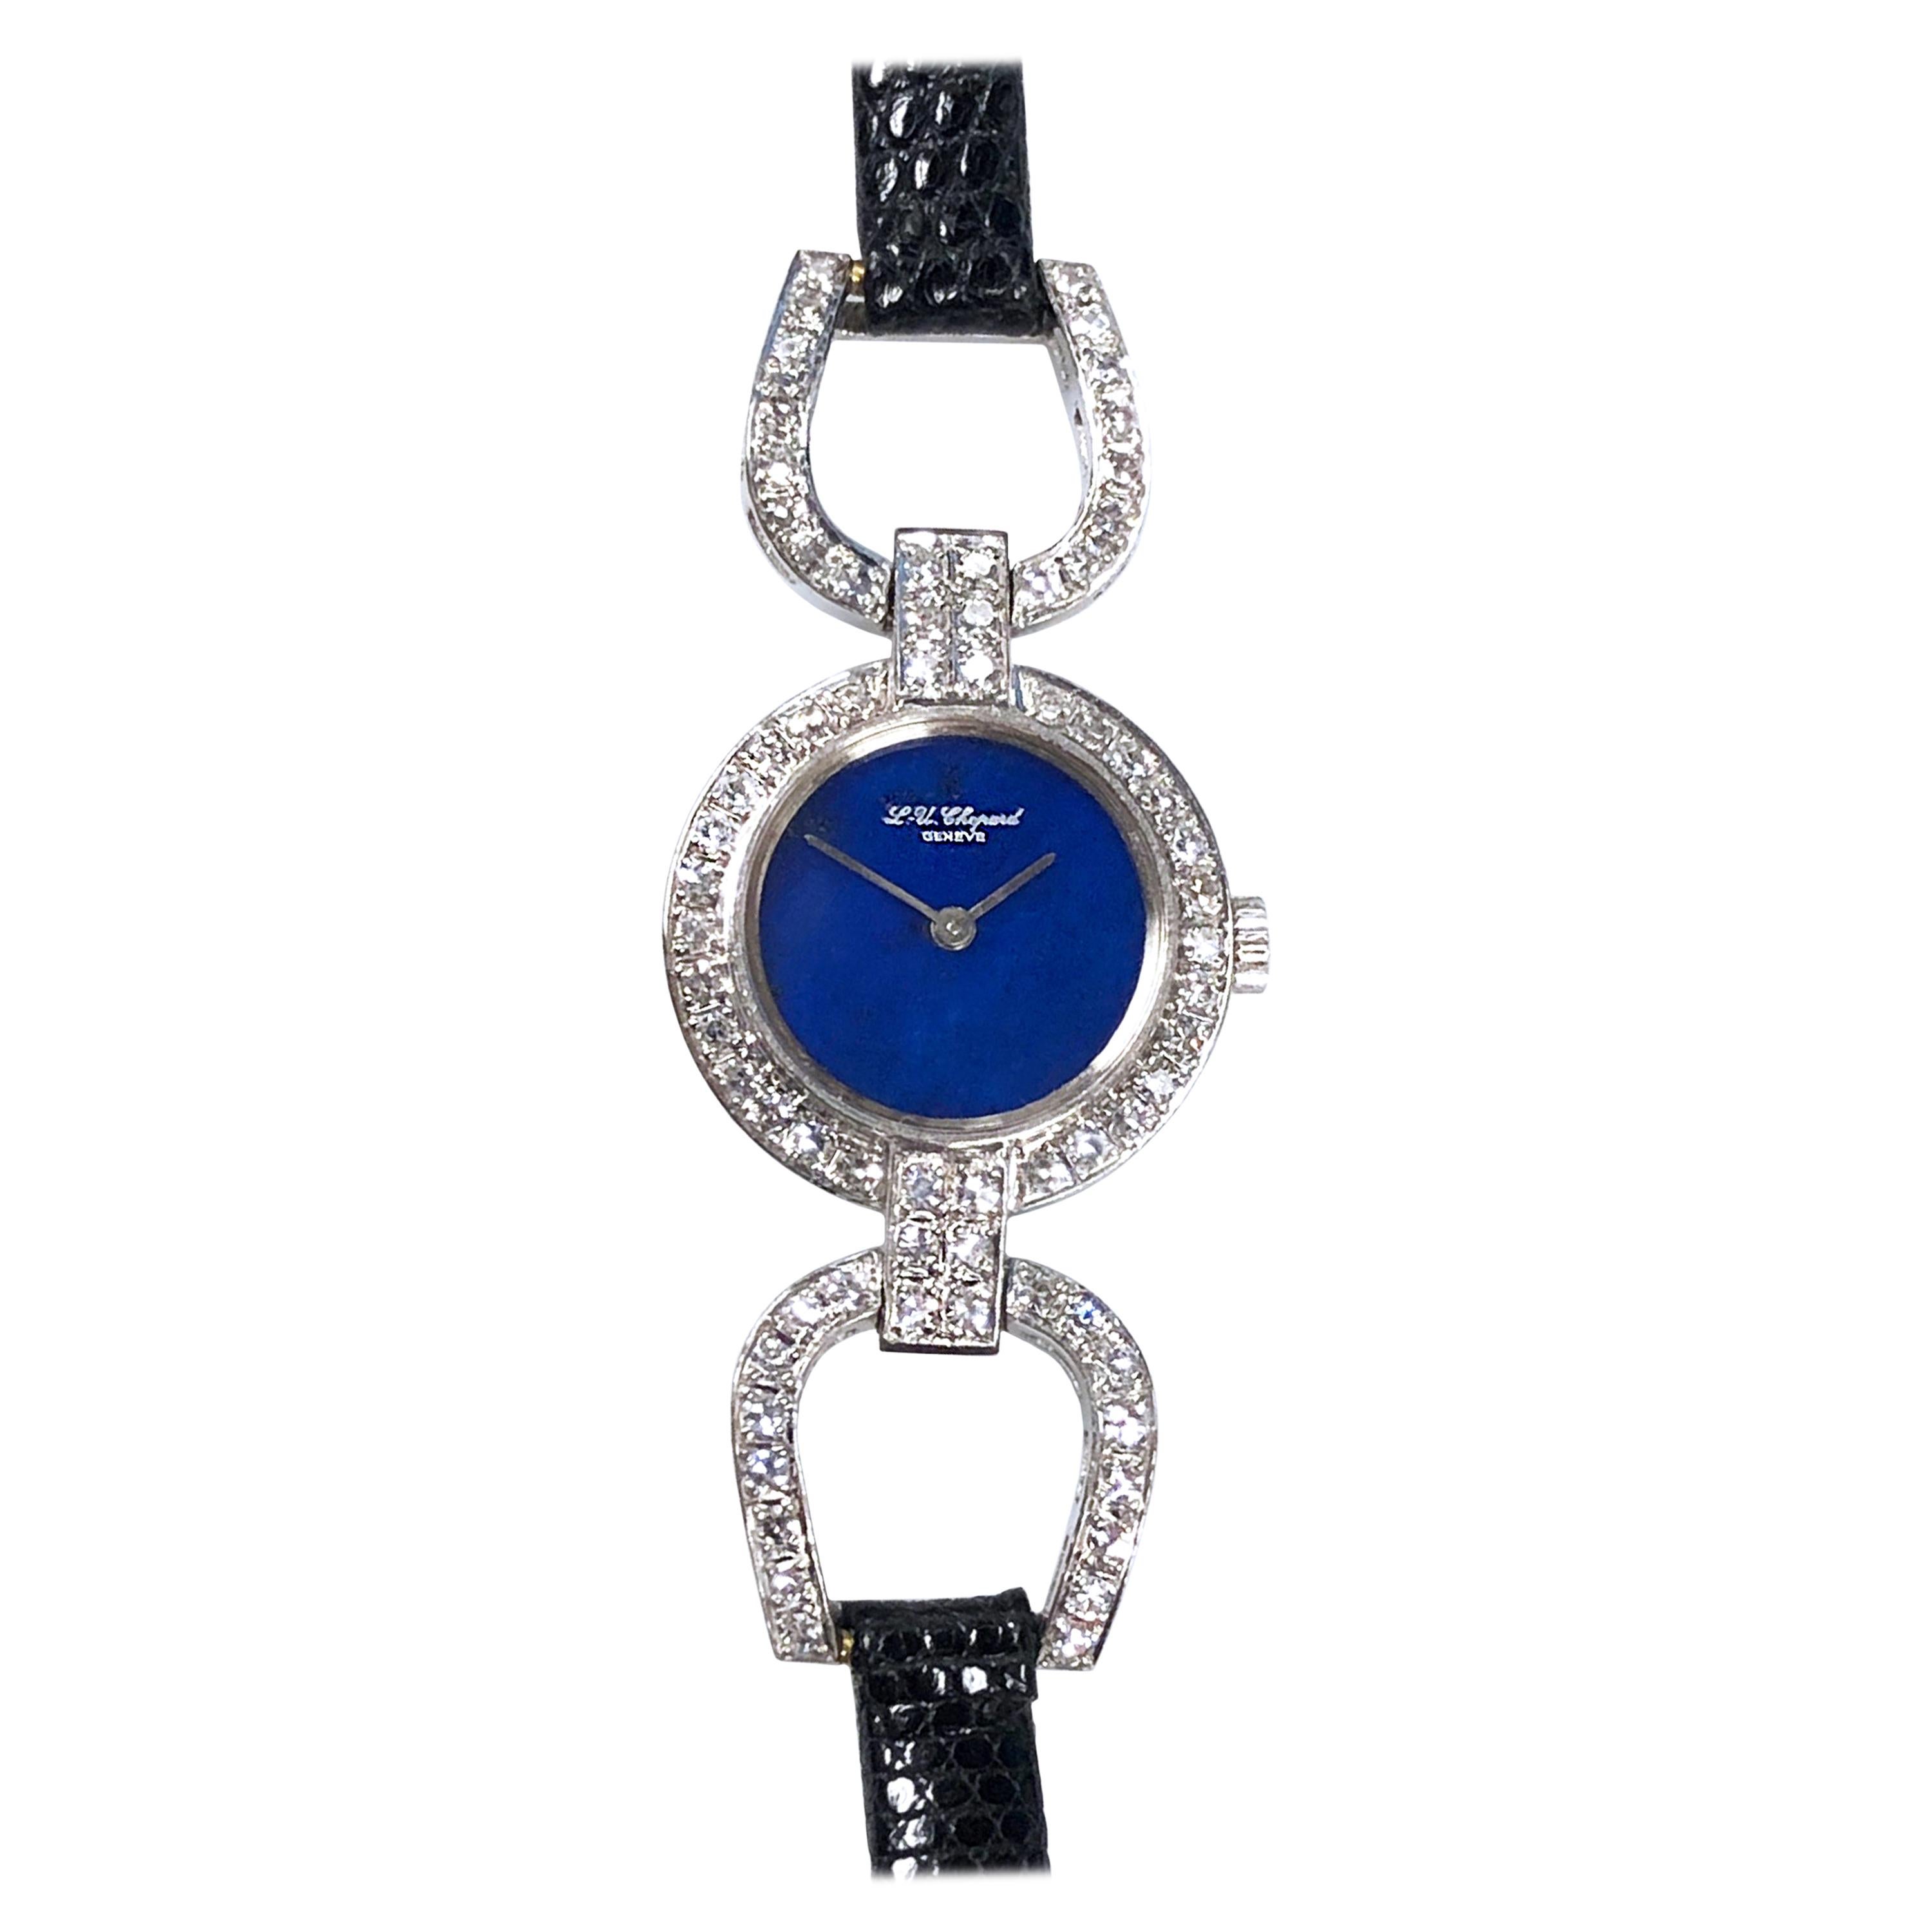 Chopard White Gold Diamonds and Lapis Dial Ladies Wristwatch